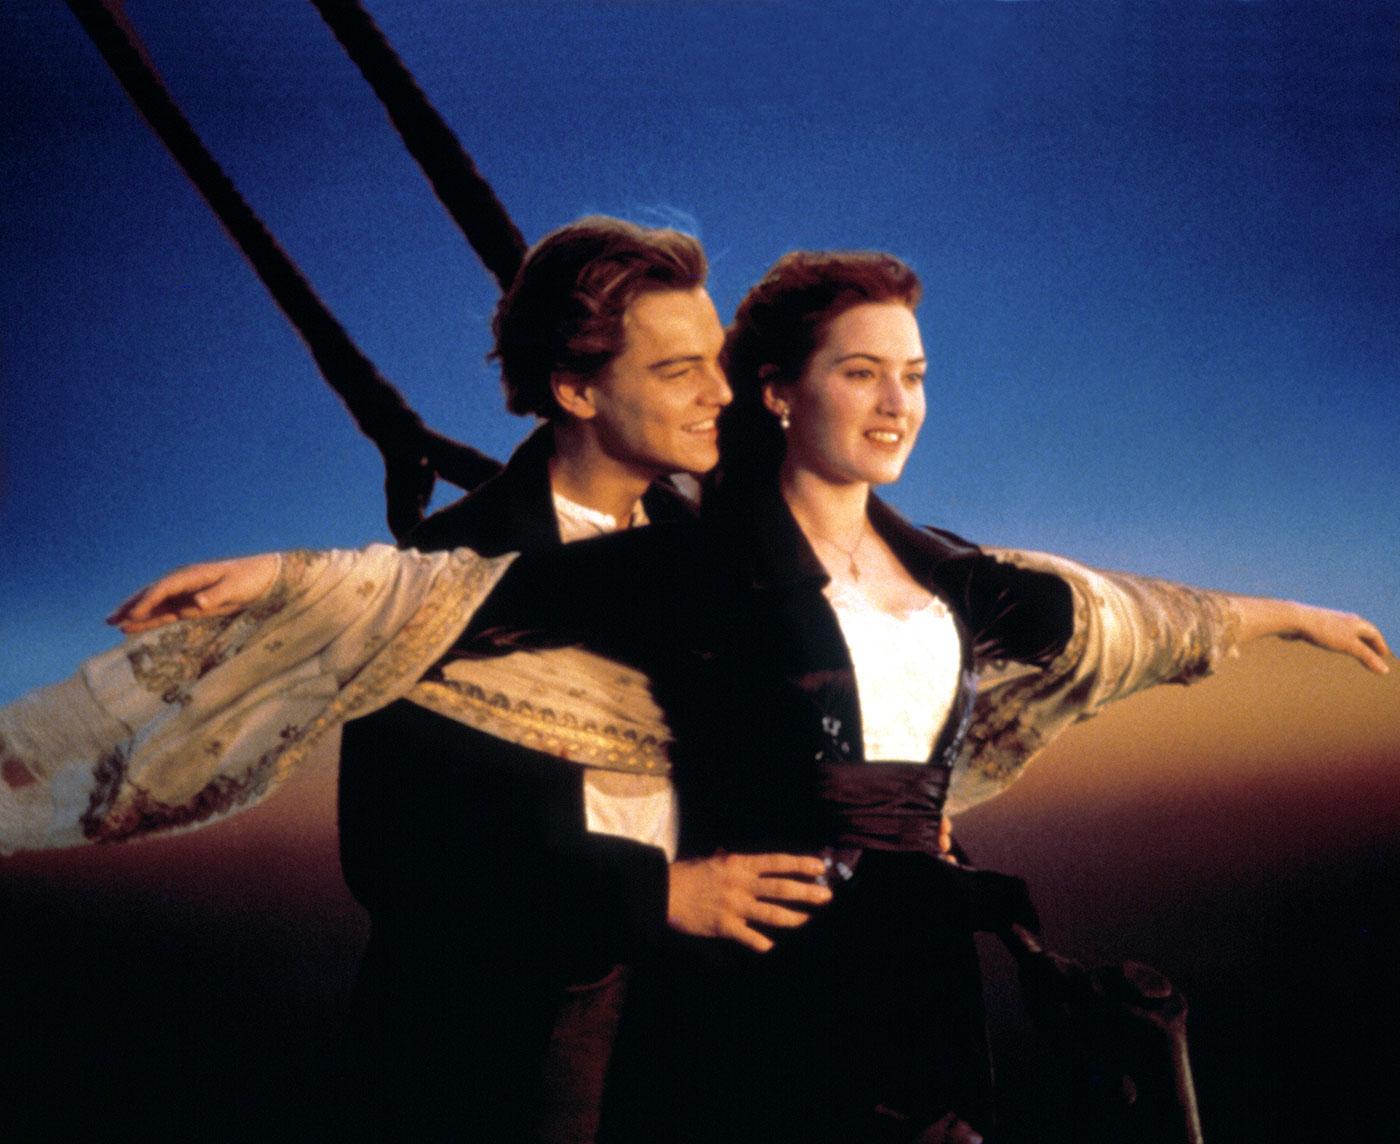 Leonardo DiCaprio som karaktären Jack i filmen ”Titanic” 1997.